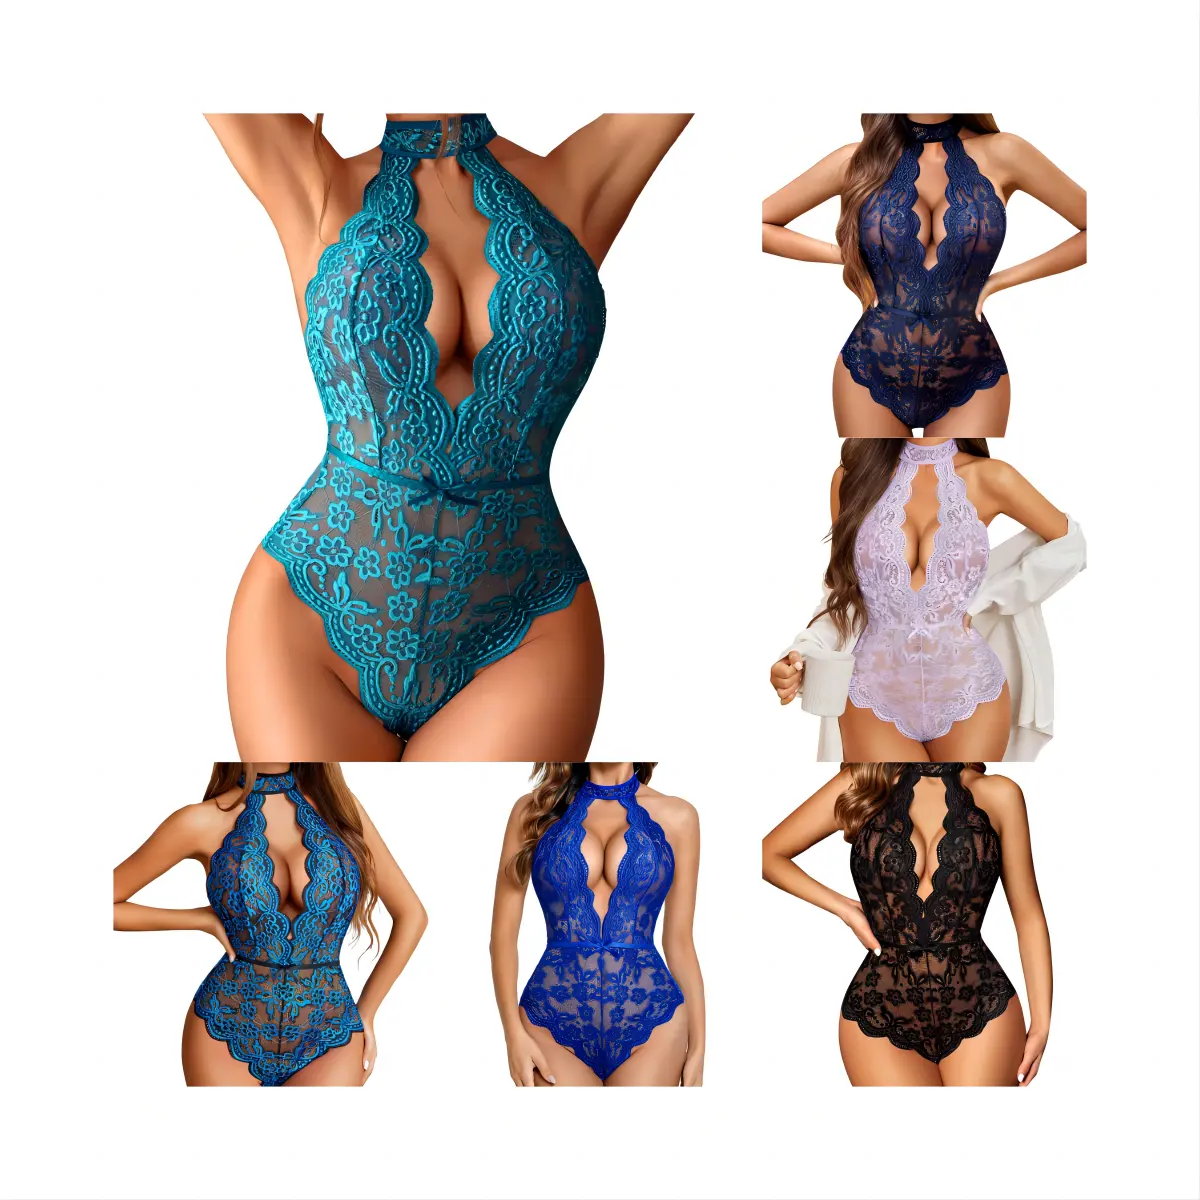 Ladies Erotic Bralette G-string Underwear 2 Piece Hollow Out Lace Women's Sexy Lingerie Bra Sets